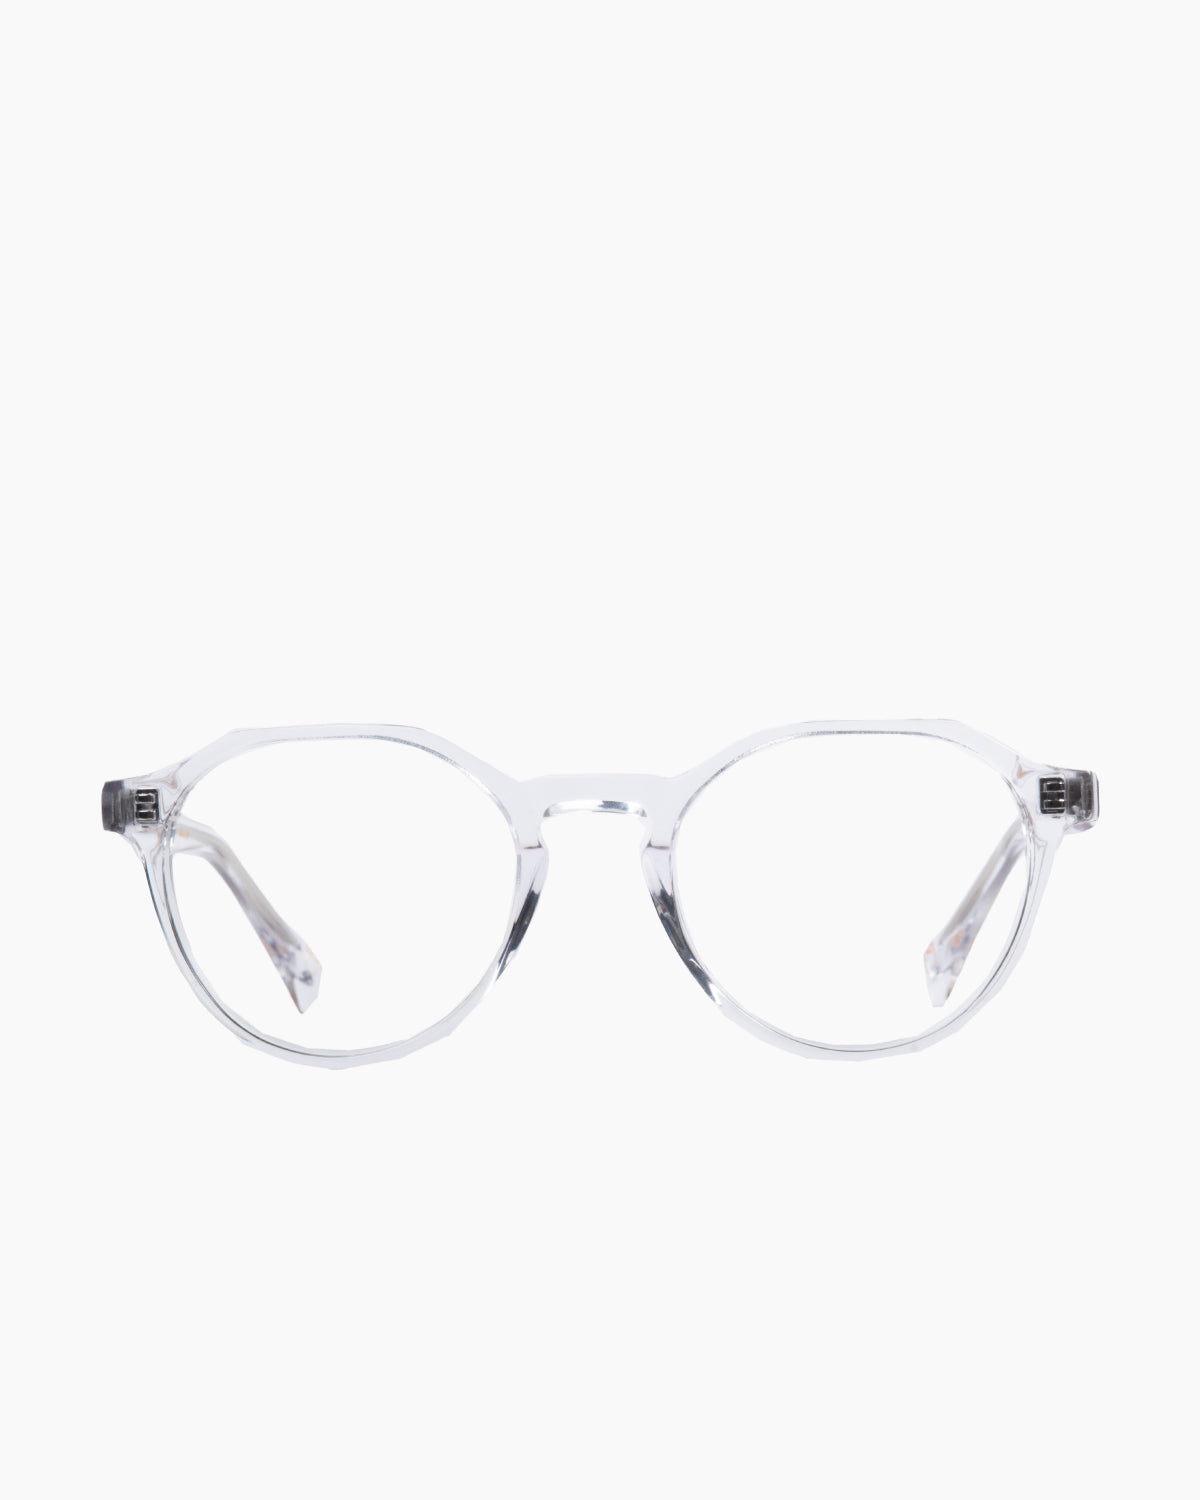 Spectacleeyeworks - Amir - 708 | glasses bar:  Marie-Sophie Dion